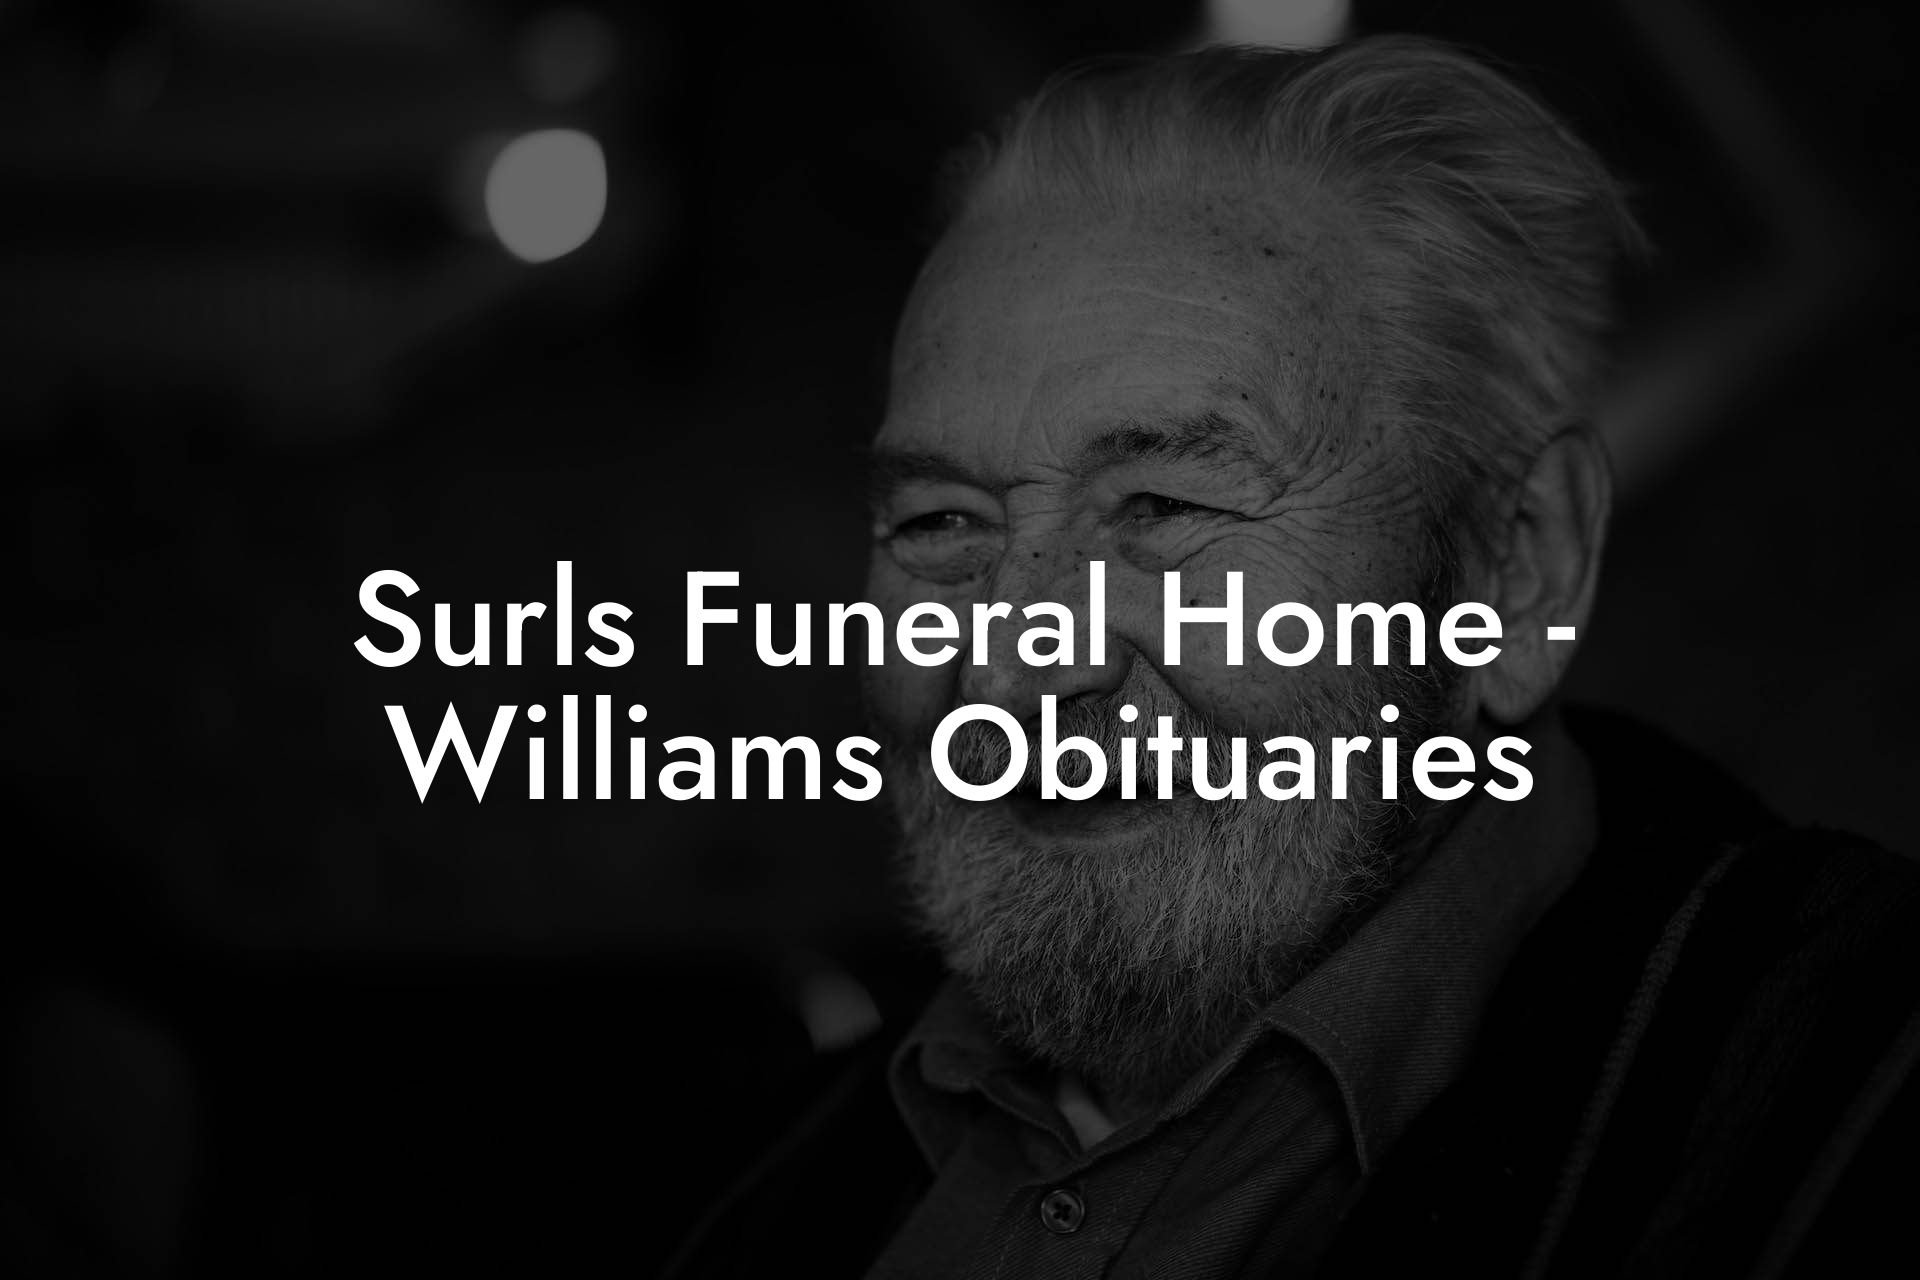 Surls Funeral Home - Williams Obituaries